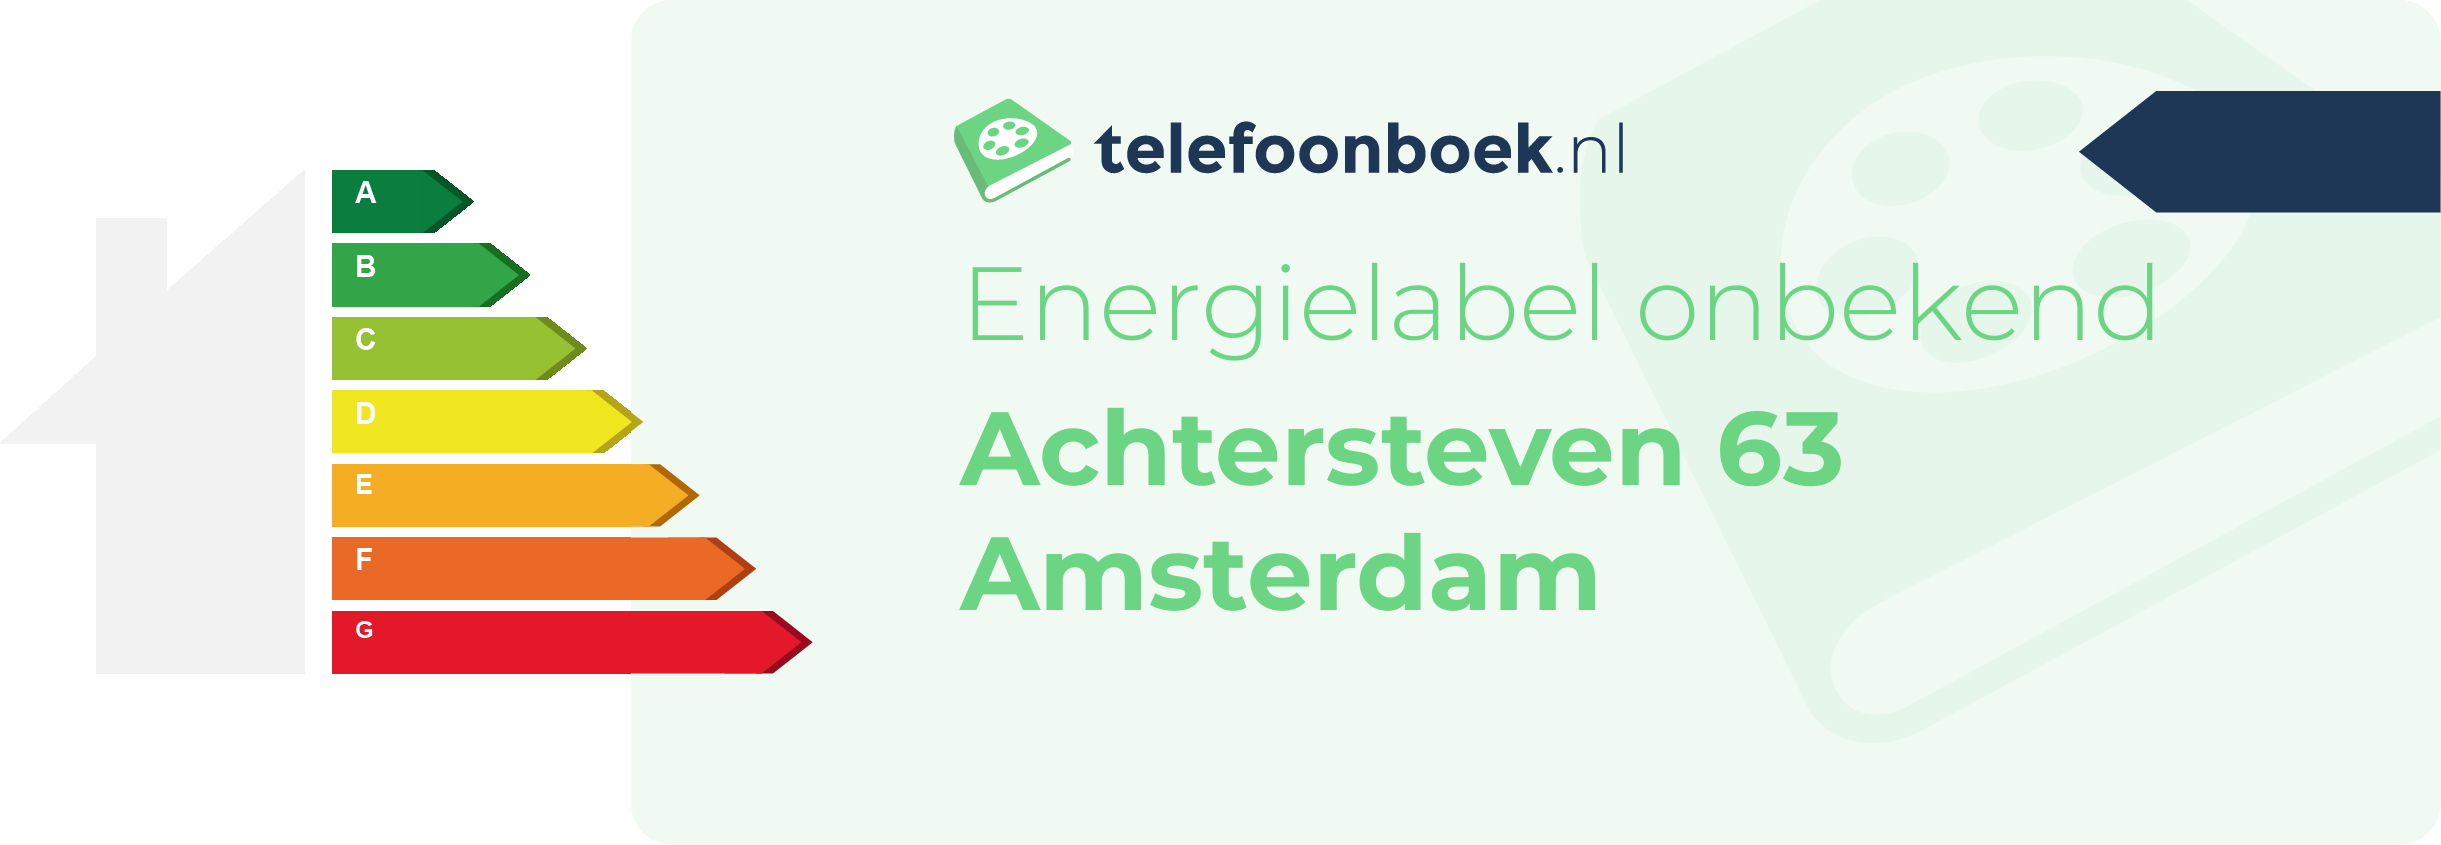 Energielabel Achtersteven 63 Amsterdam